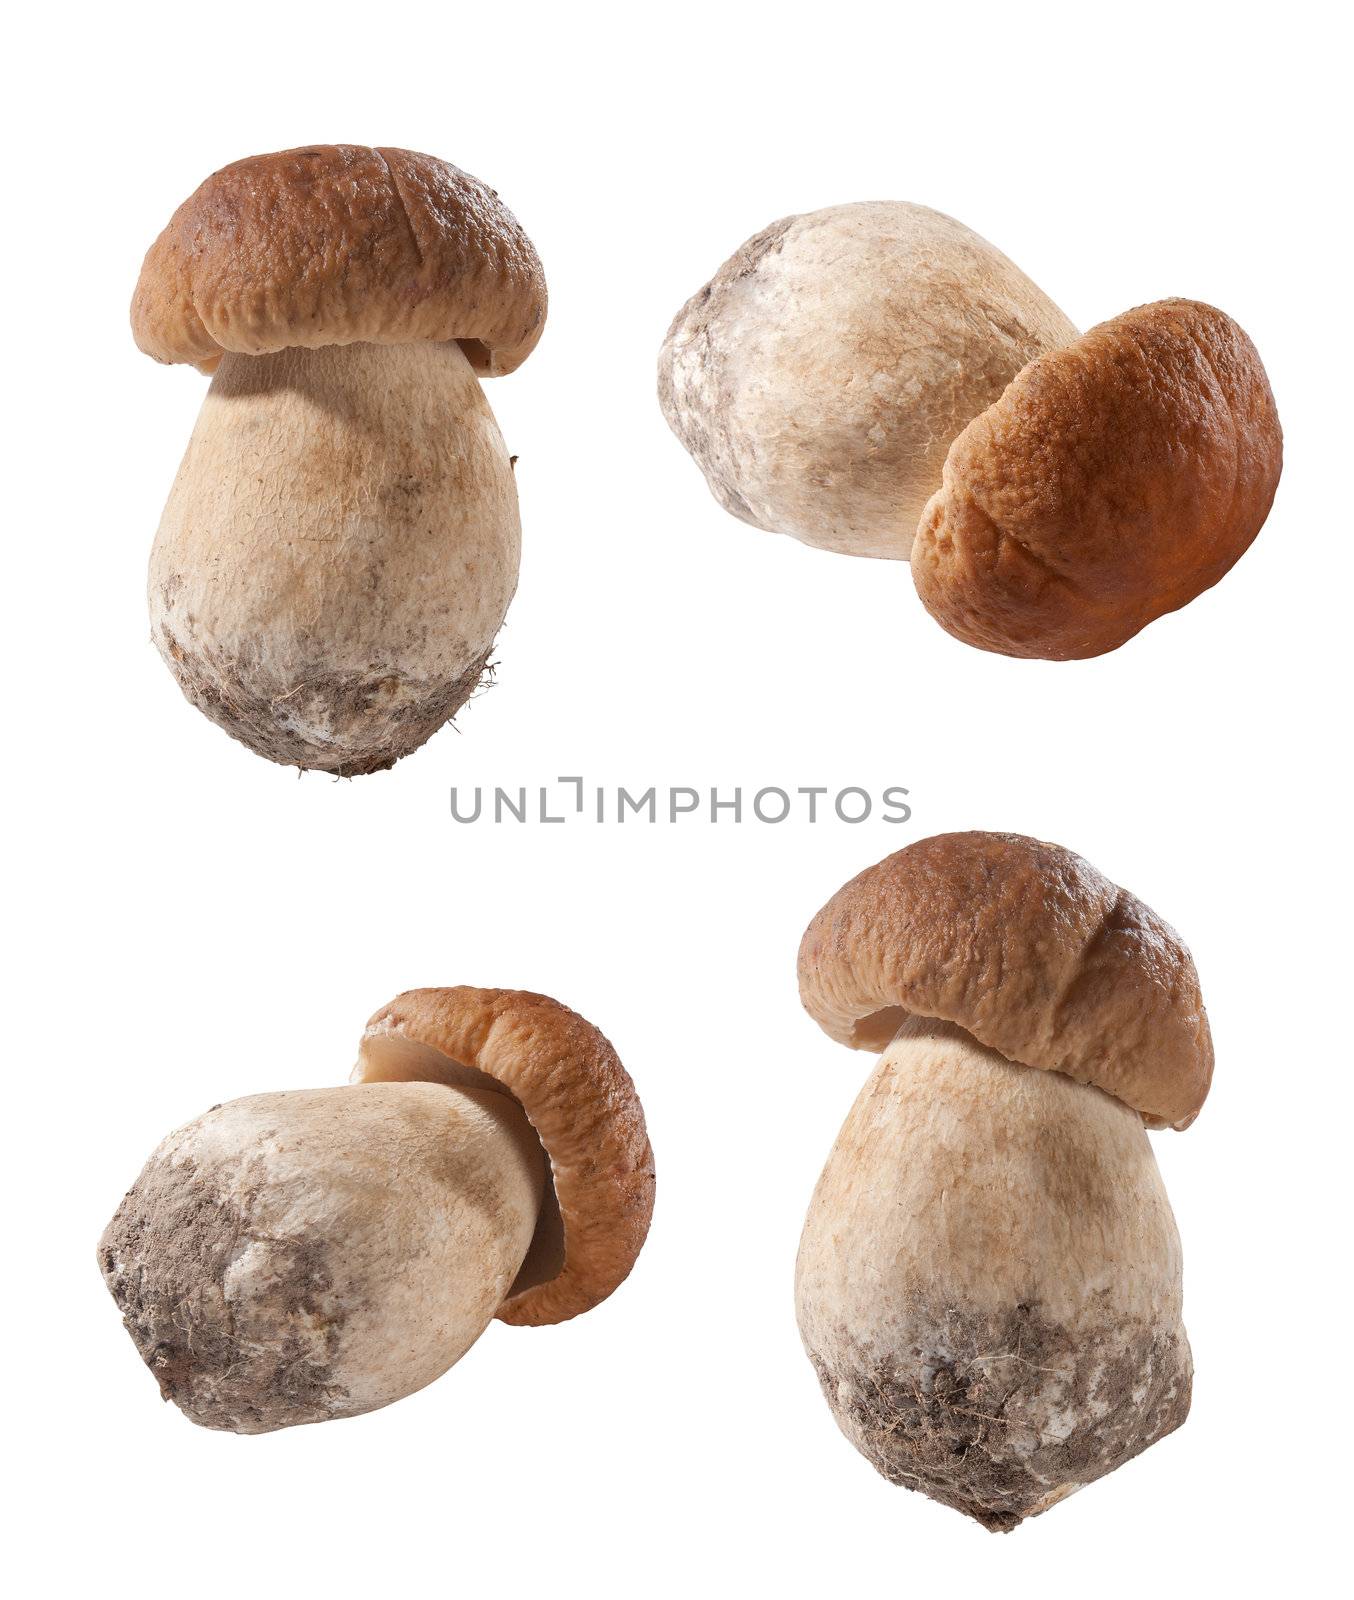 White mushrooms by Angorius